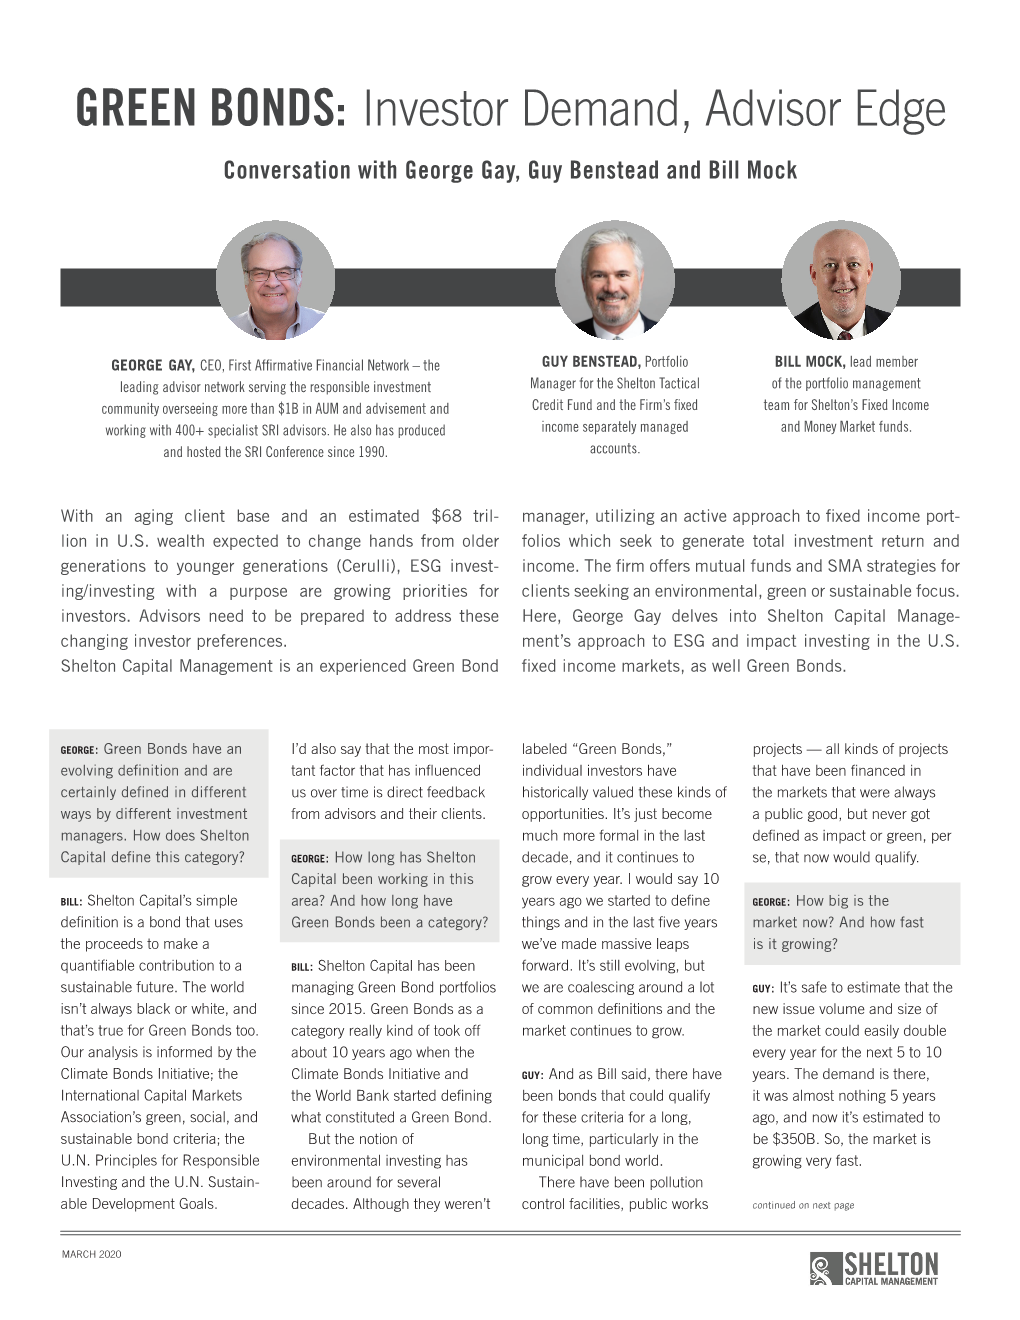 Green Bonds: Investor Demand, Advisor Edge Conversation with George Gay, Guy Benstead and Bill Mock